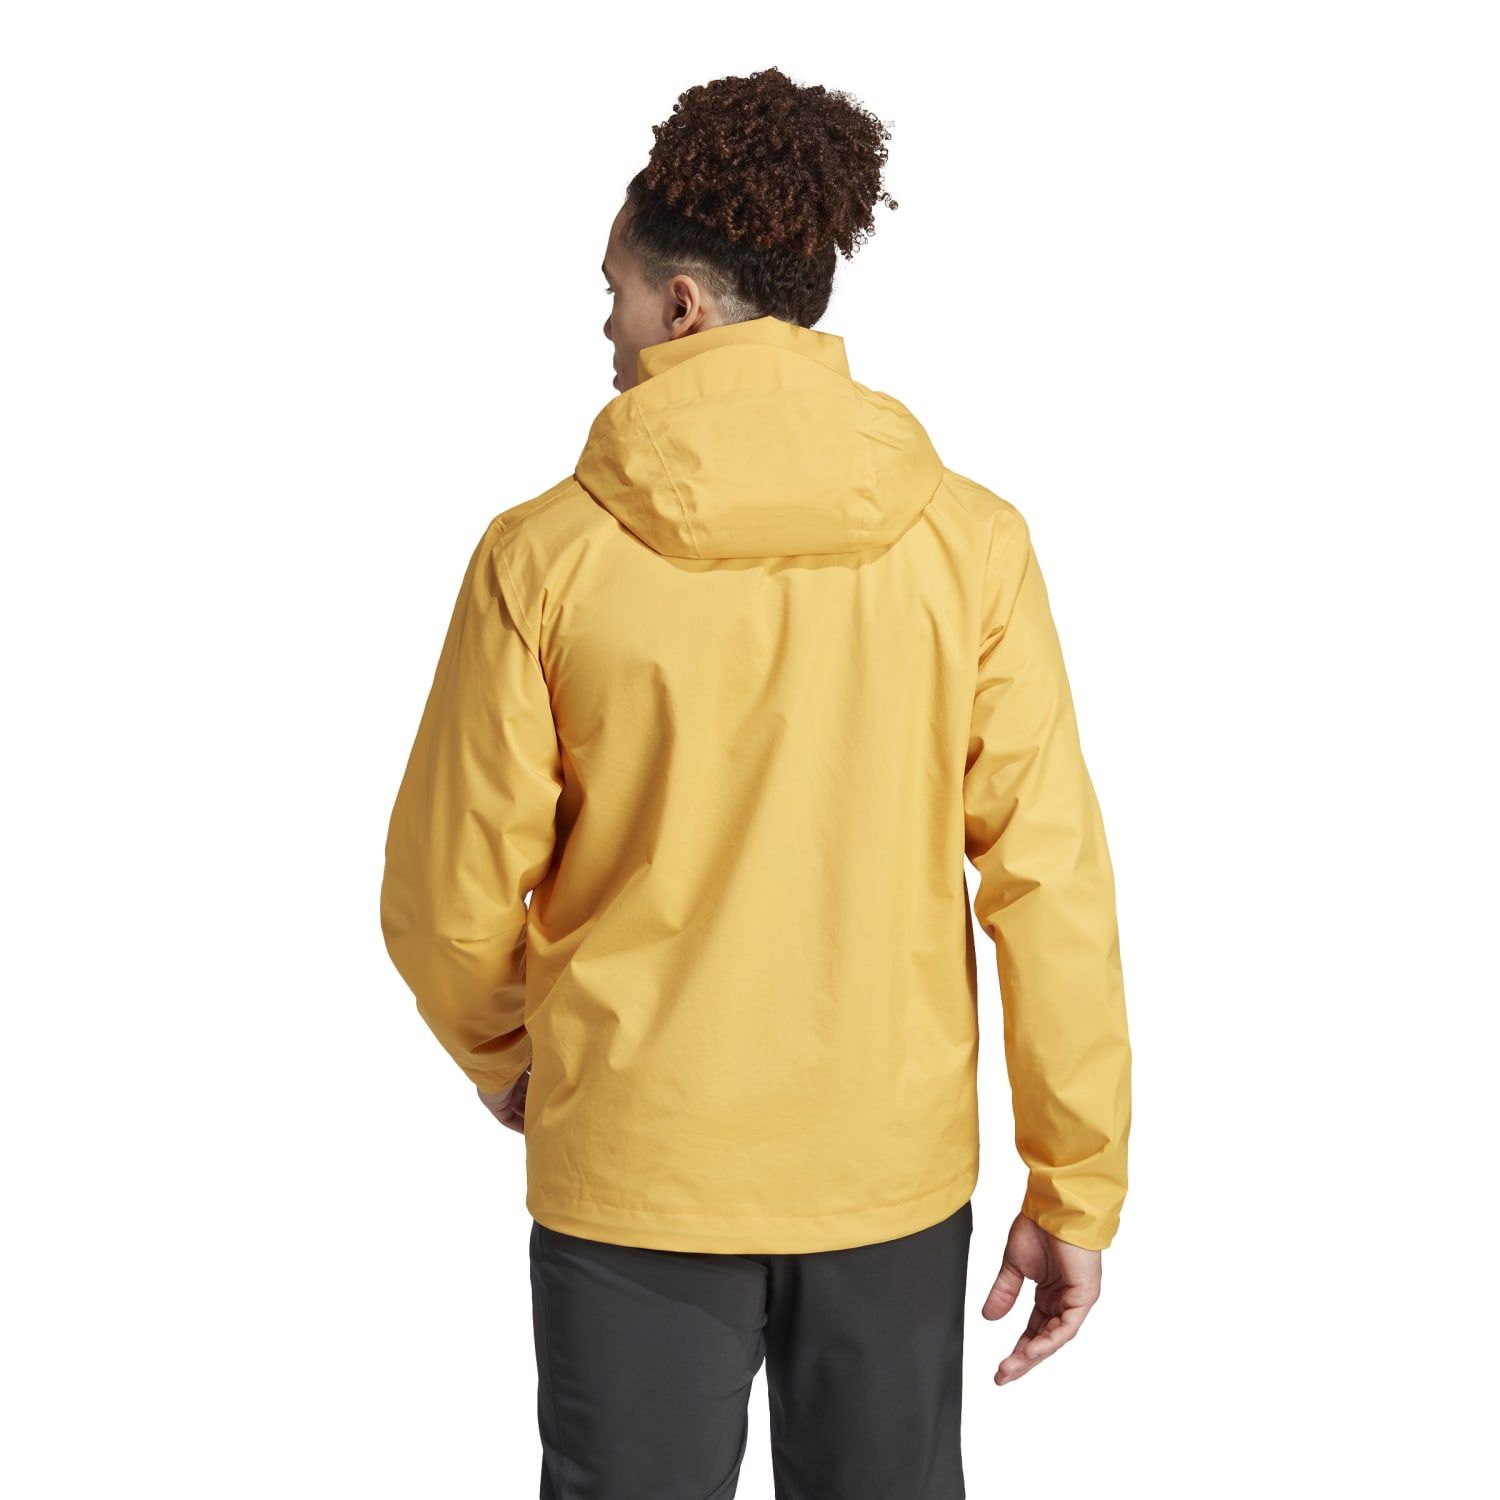 Adidas MT RR JACKET, moška pohodna jakna, rumena | Intersport